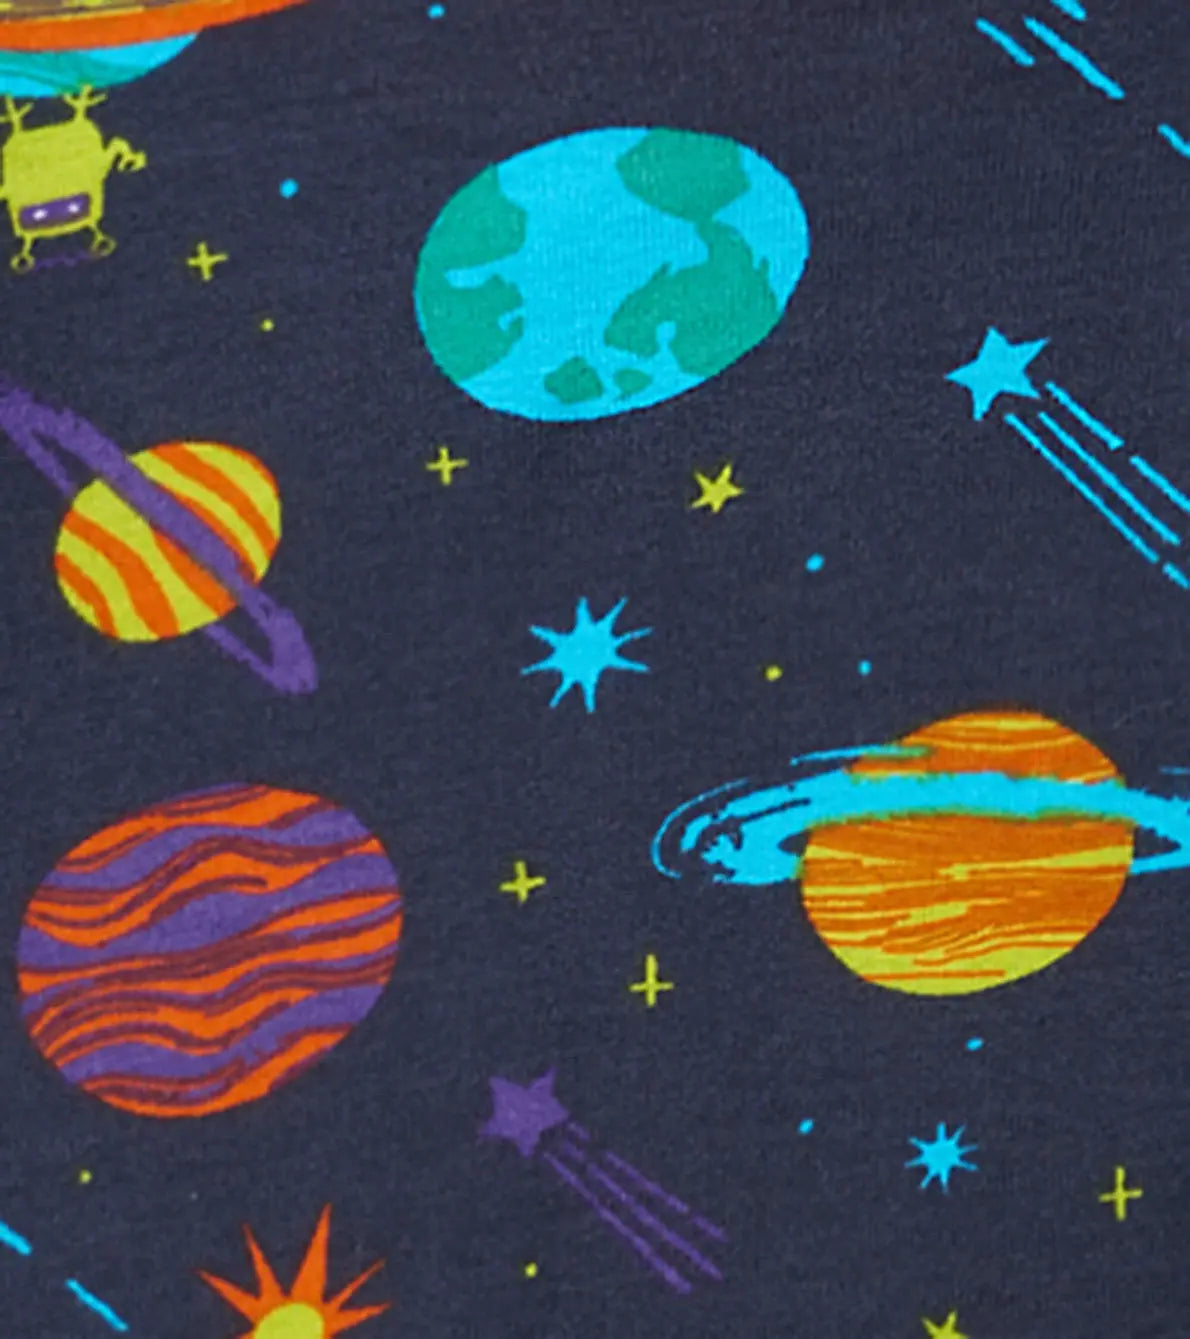 Space Explorer Kids Organic Cotton Pajama Set | Hatley | Hatley | Jenni Kidz